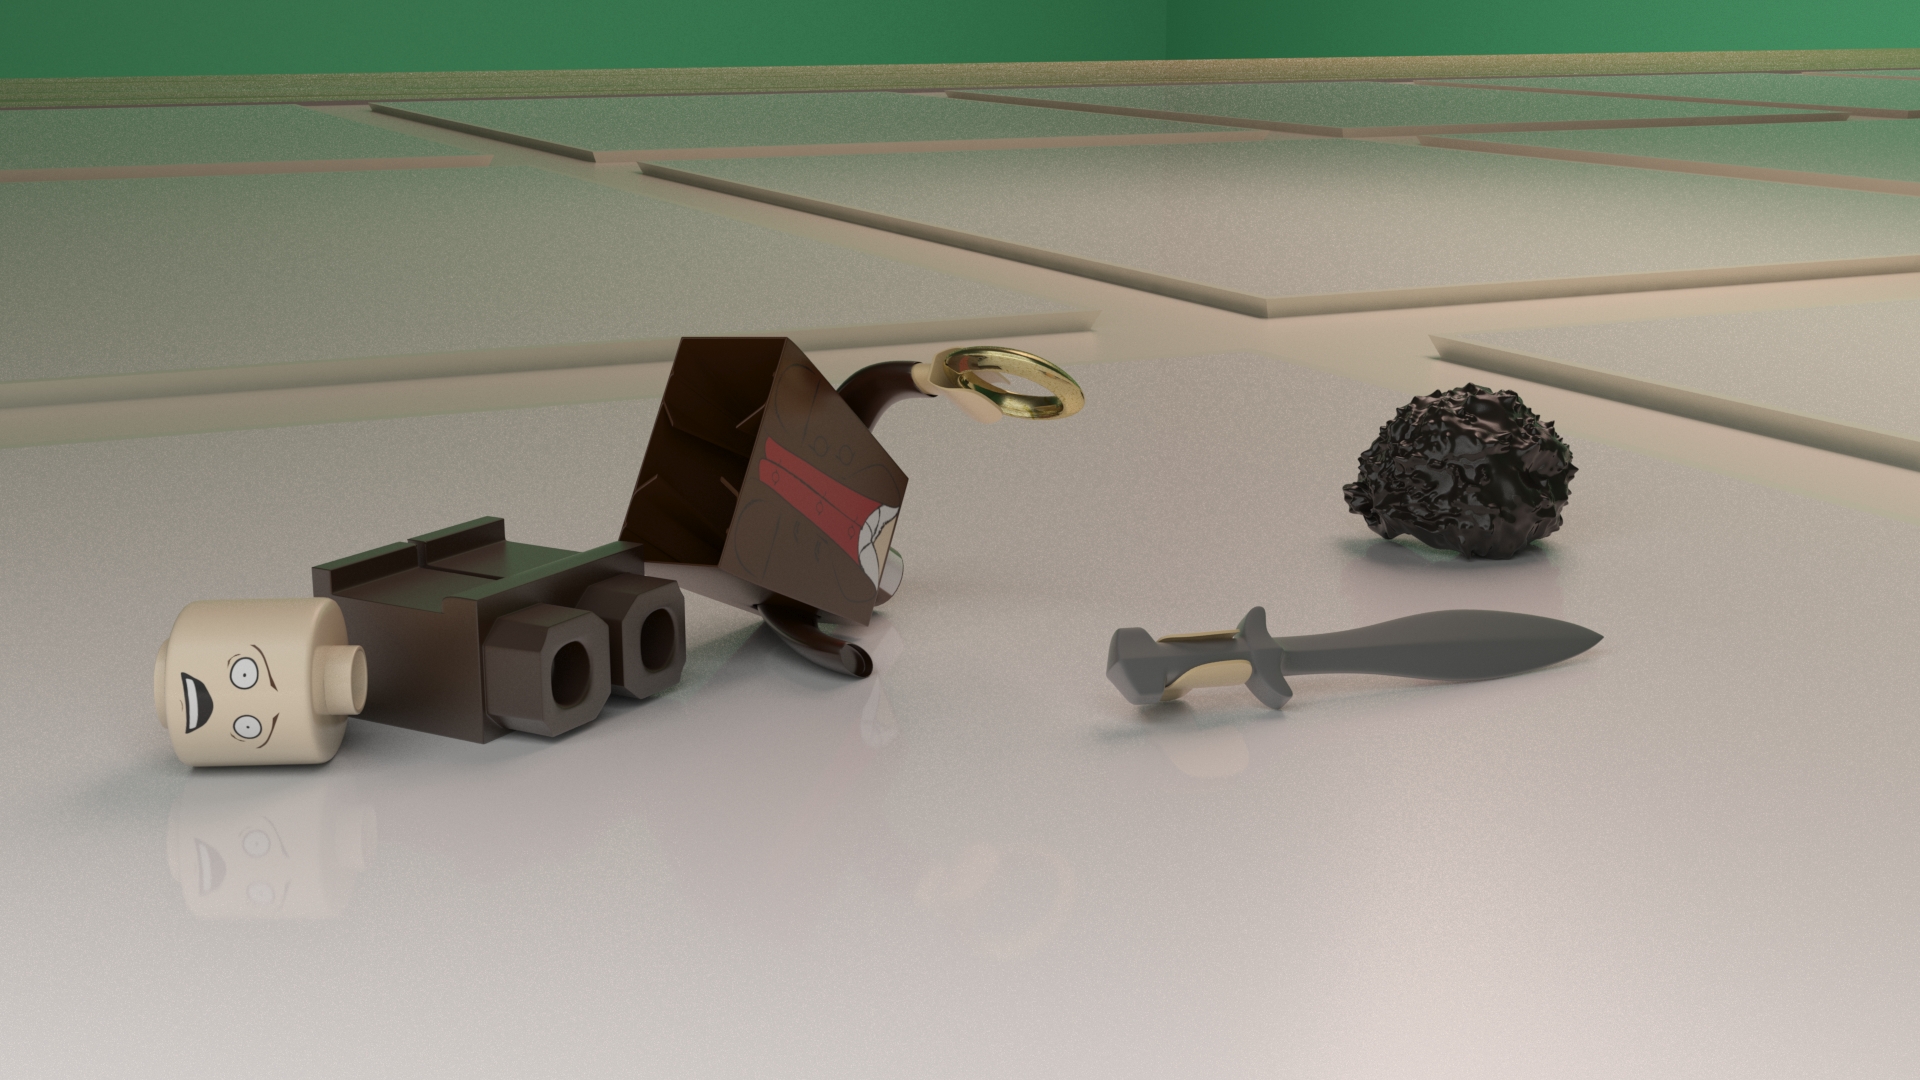 3D model of a Frodo Baggins Lego figure taken apart on a table